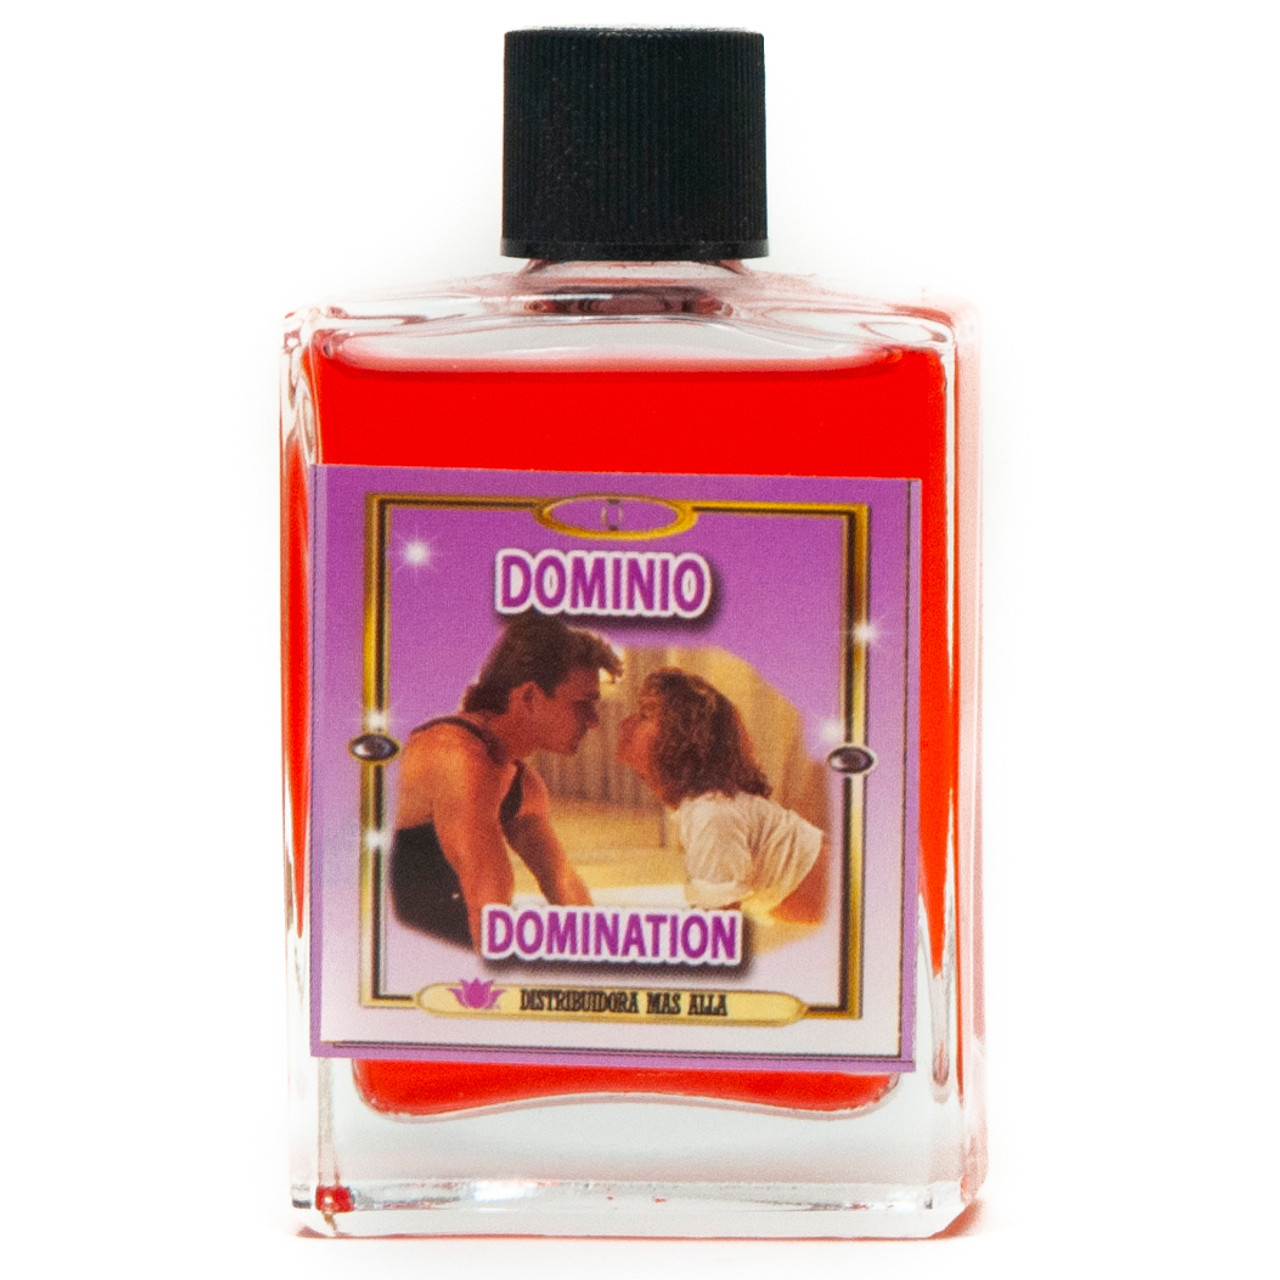 Perfume Dominio - Eseoteric Perfume Domination